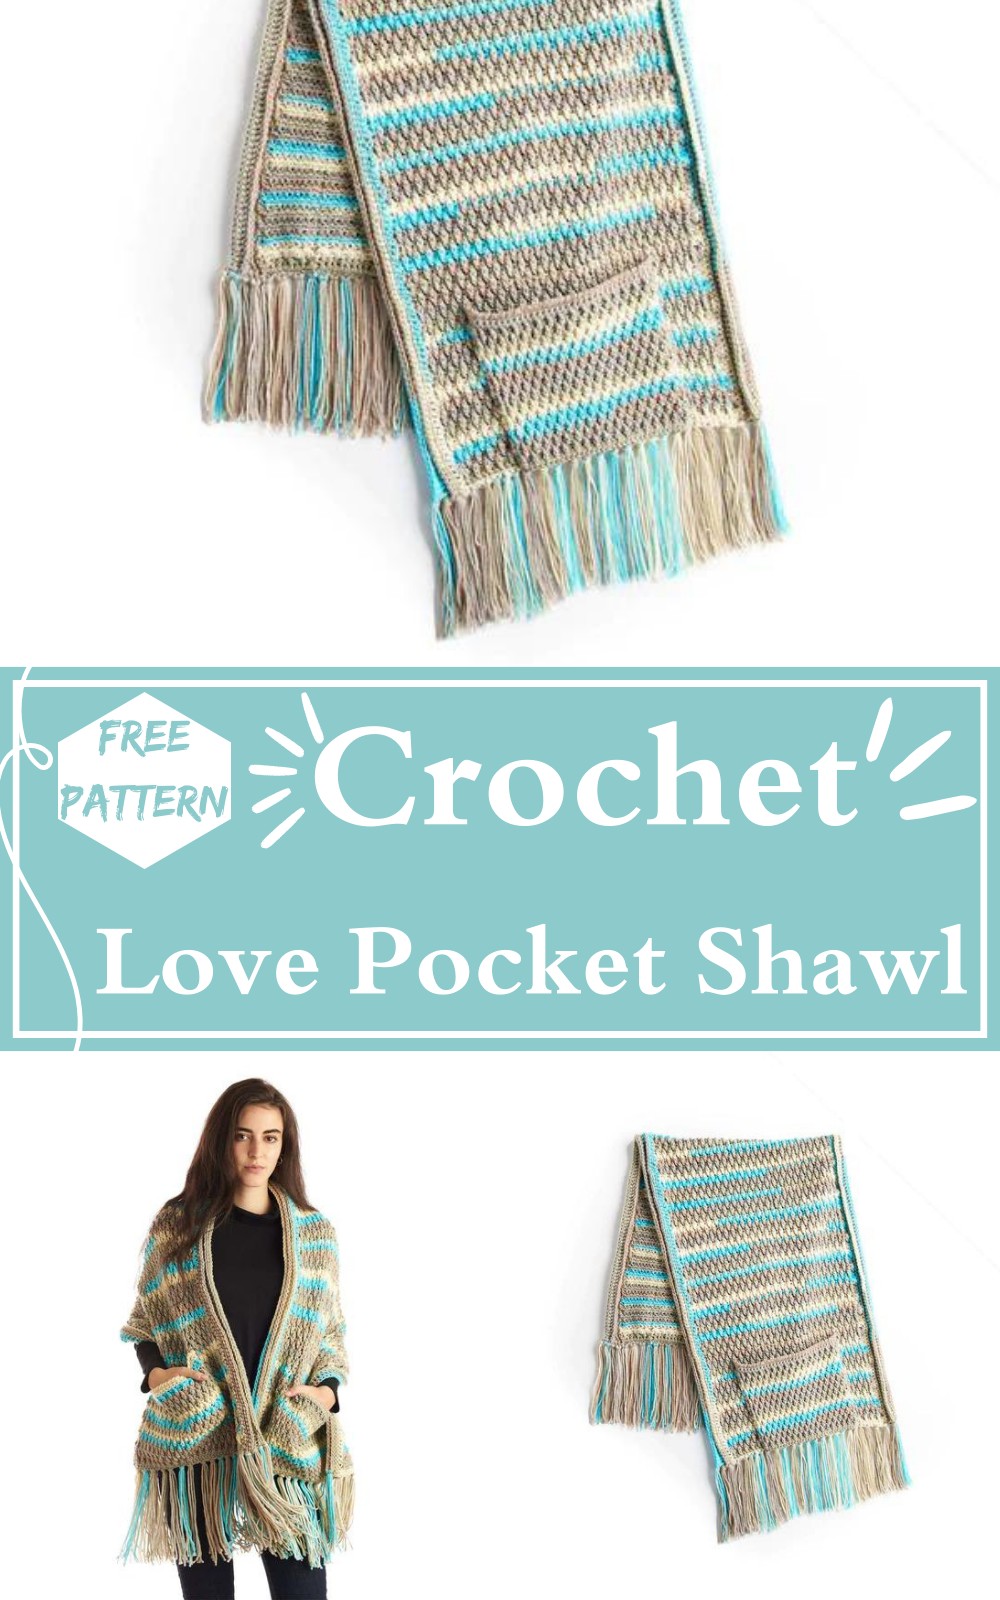 Crochet With Love Pocket Shawl